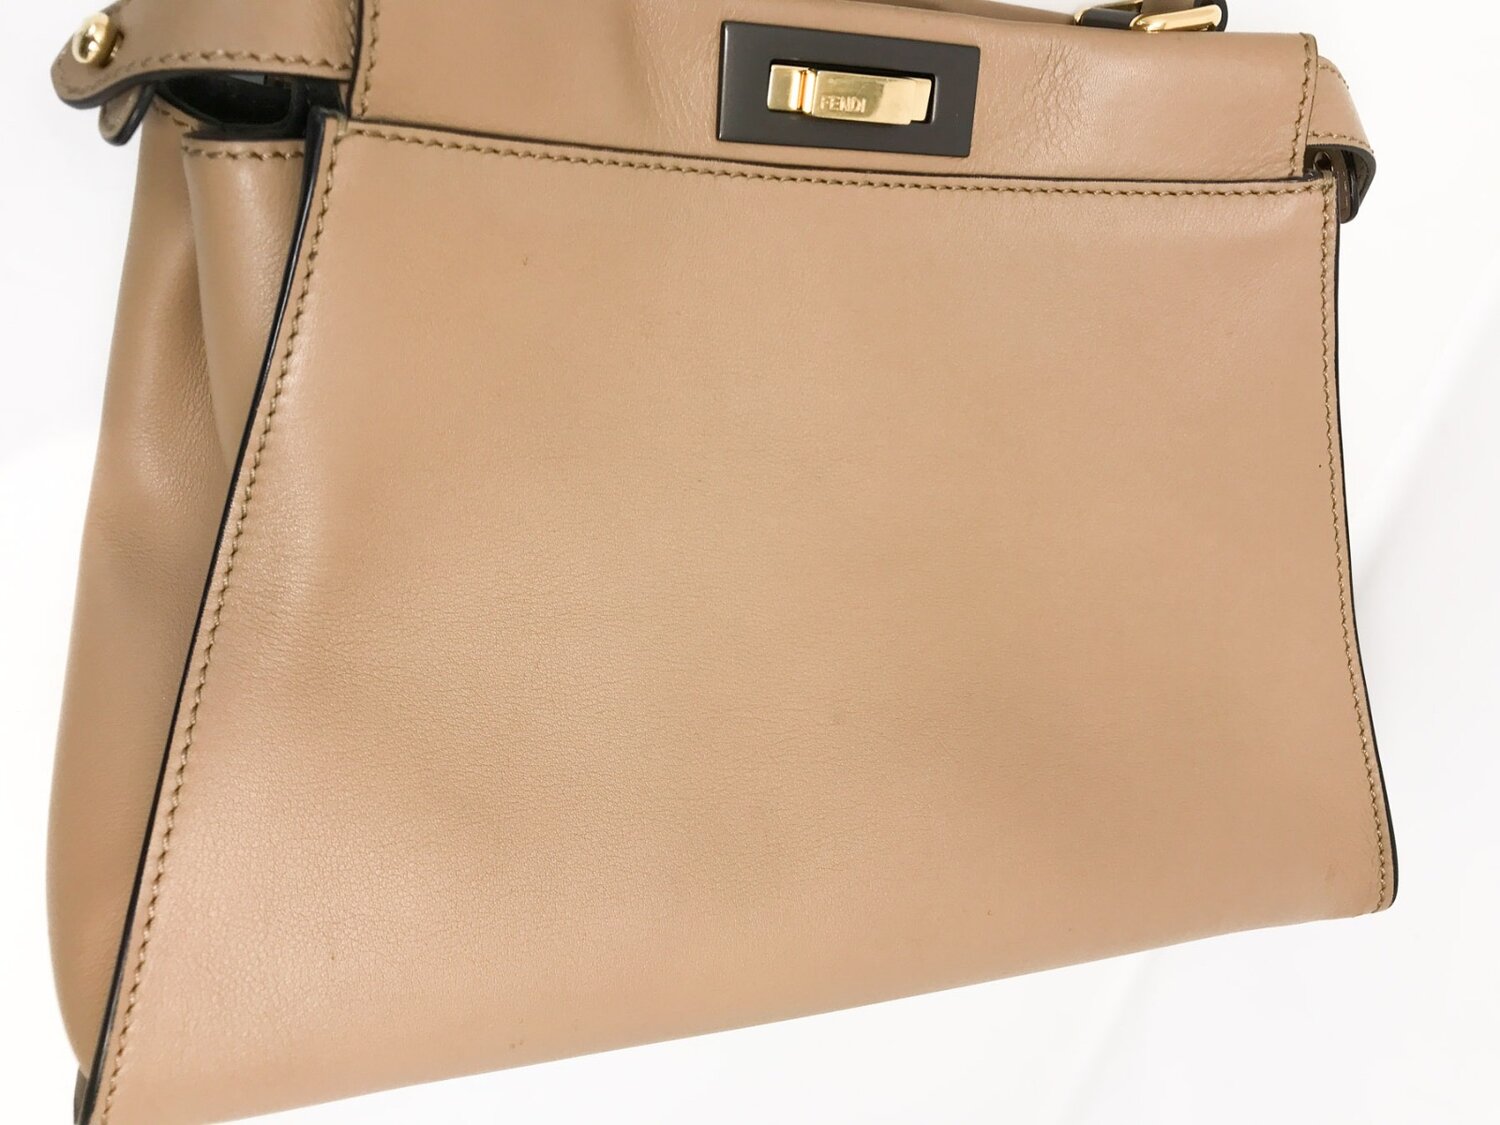 Fendi Medium Iconic Peekaboo Bag — DESIGNER TAKEAWAY BY QUEEN OF 